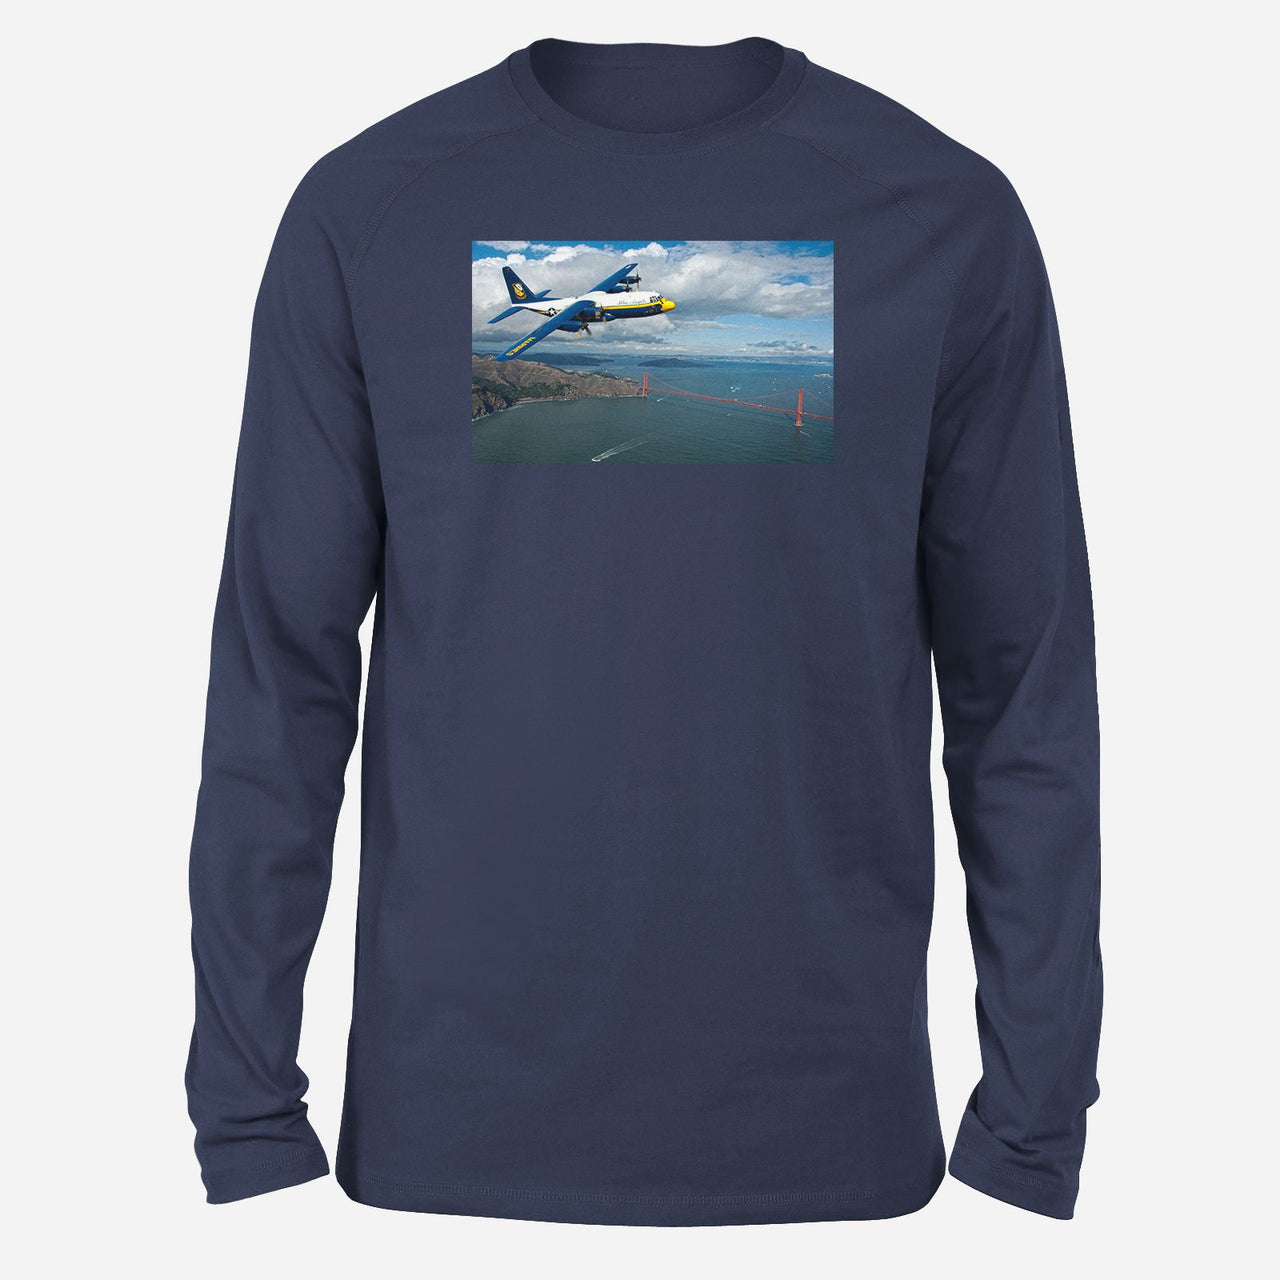 Blue Angels & Bridge Designed Long-Sleeve T-Shirts